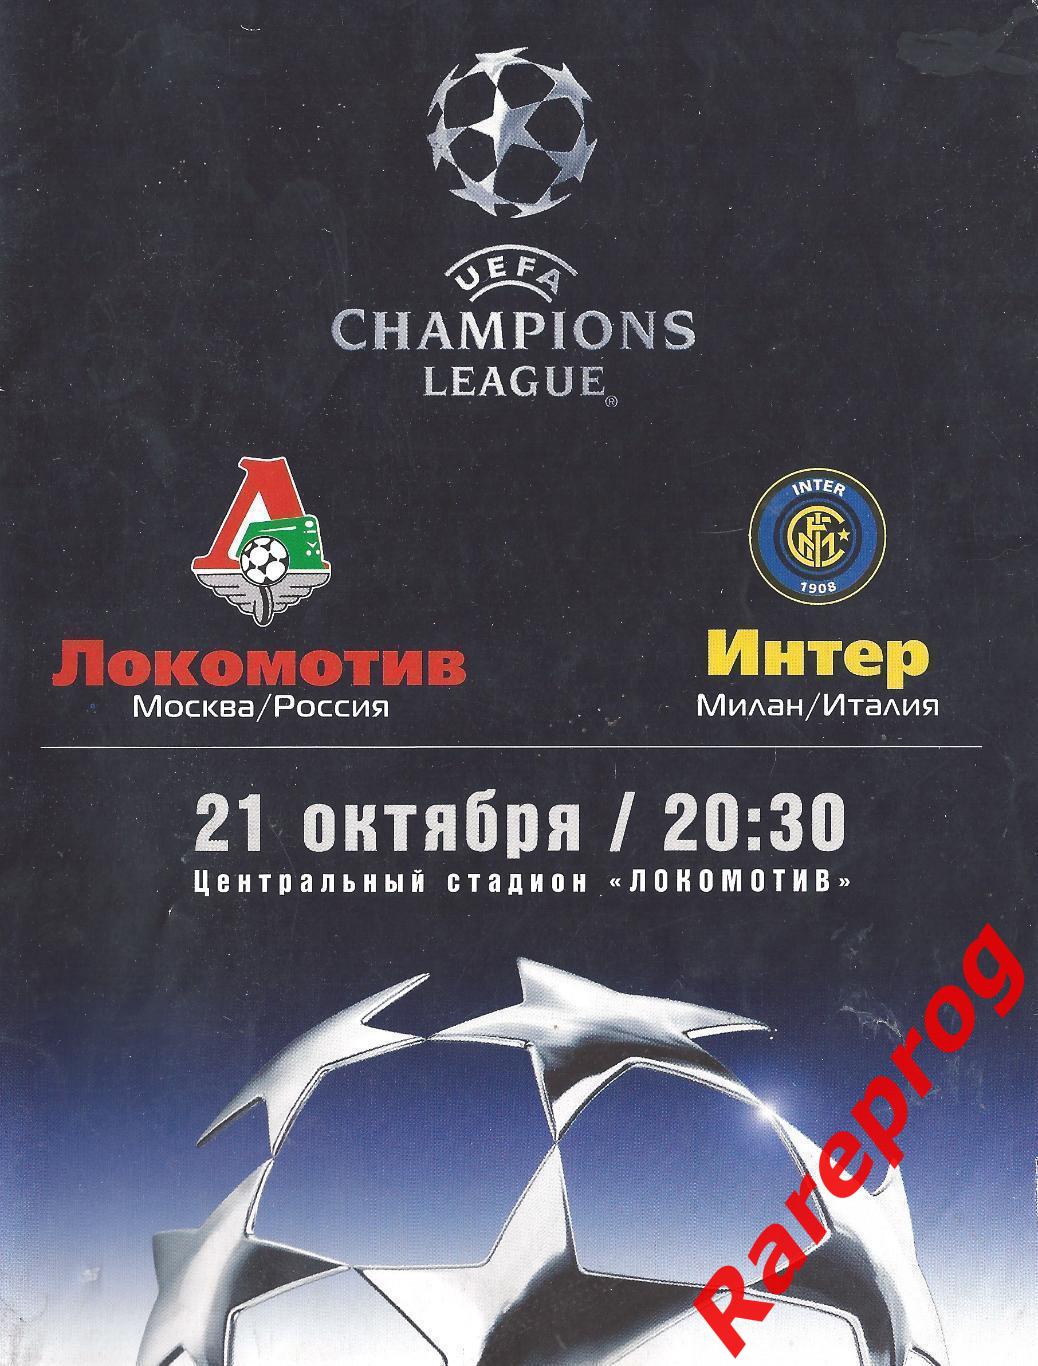 Локомотив Москва Россия - Интер Италия 2003 кубок ЛЧ УЕФА